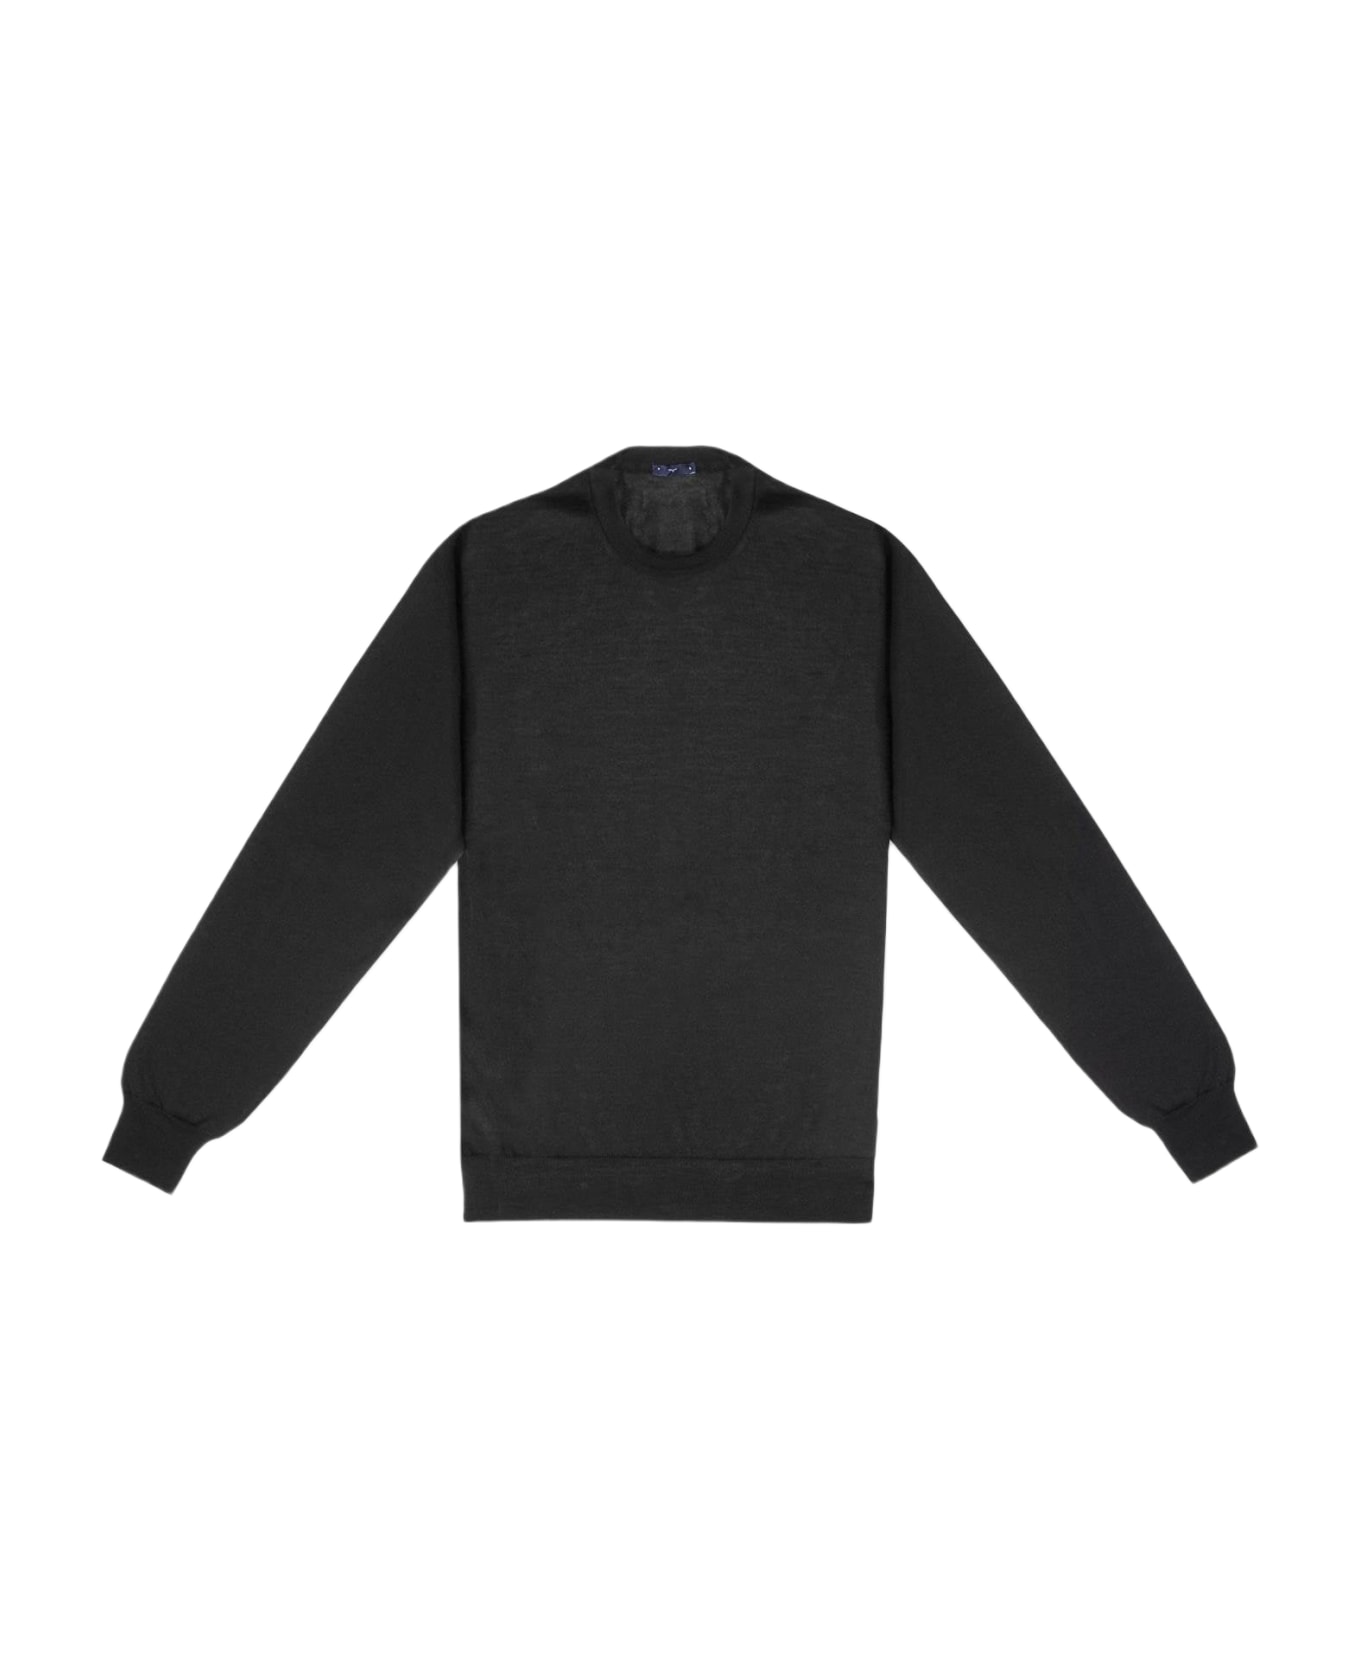 Larusmiani Sweater 'pullman' Sweater - Black